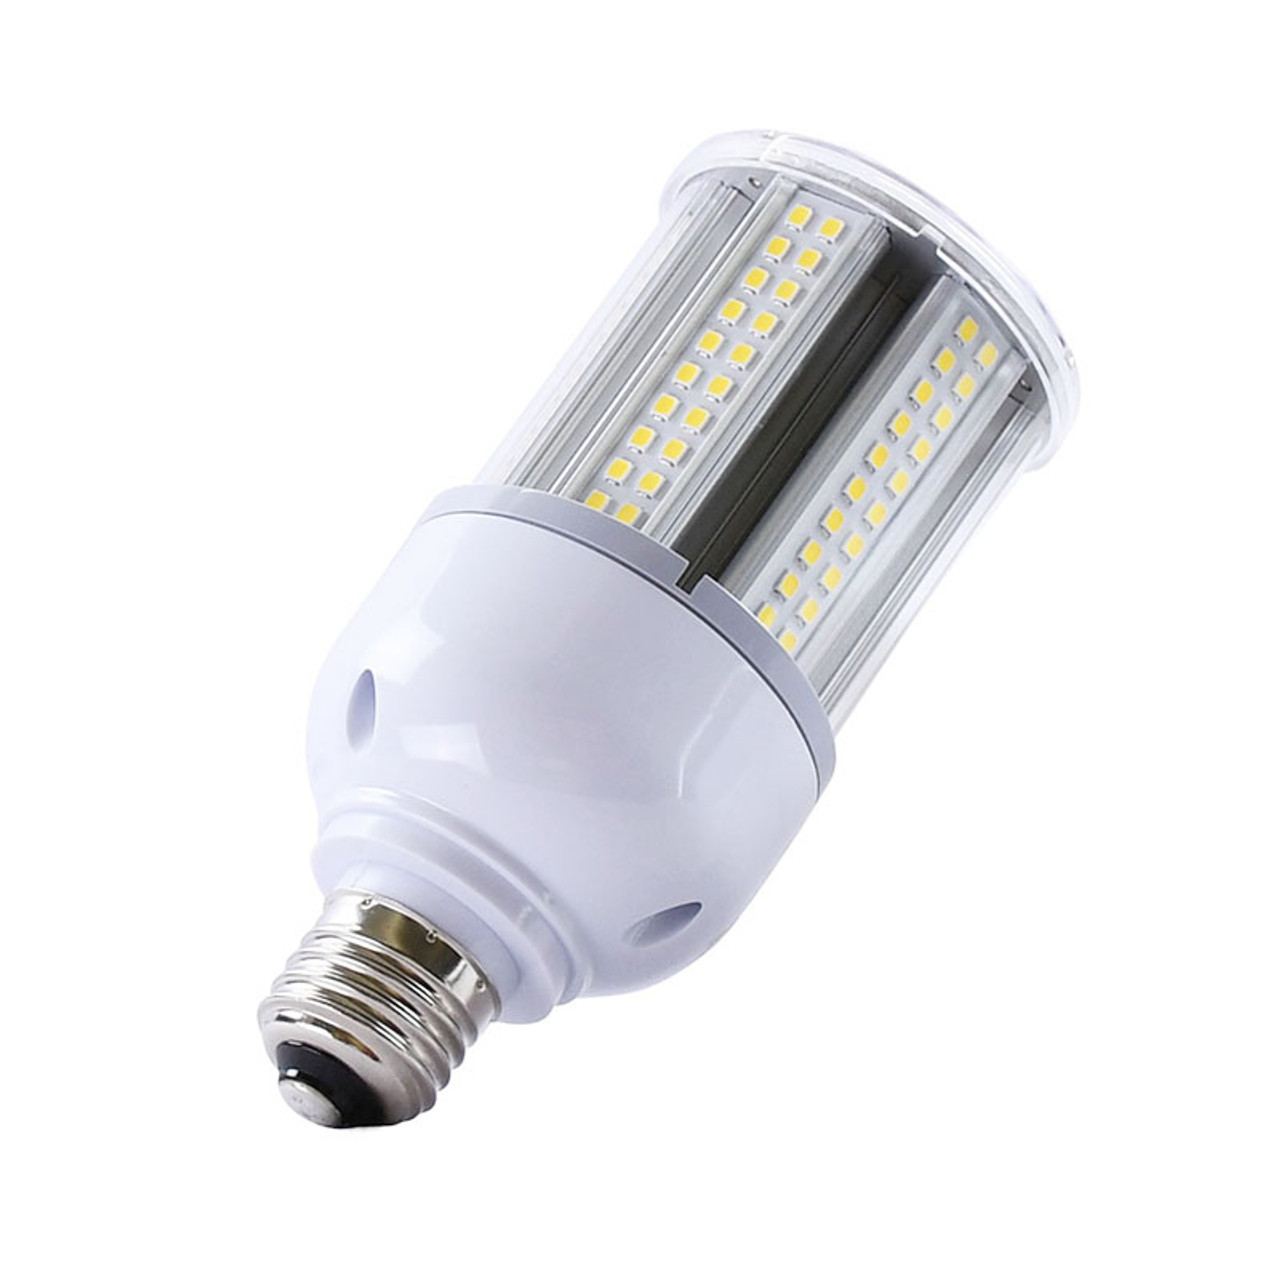 Watt LED Corn Bulb, Replaces 100 Watt HID, 2,250 Lumen, 5 Year Warranty. - LED Global